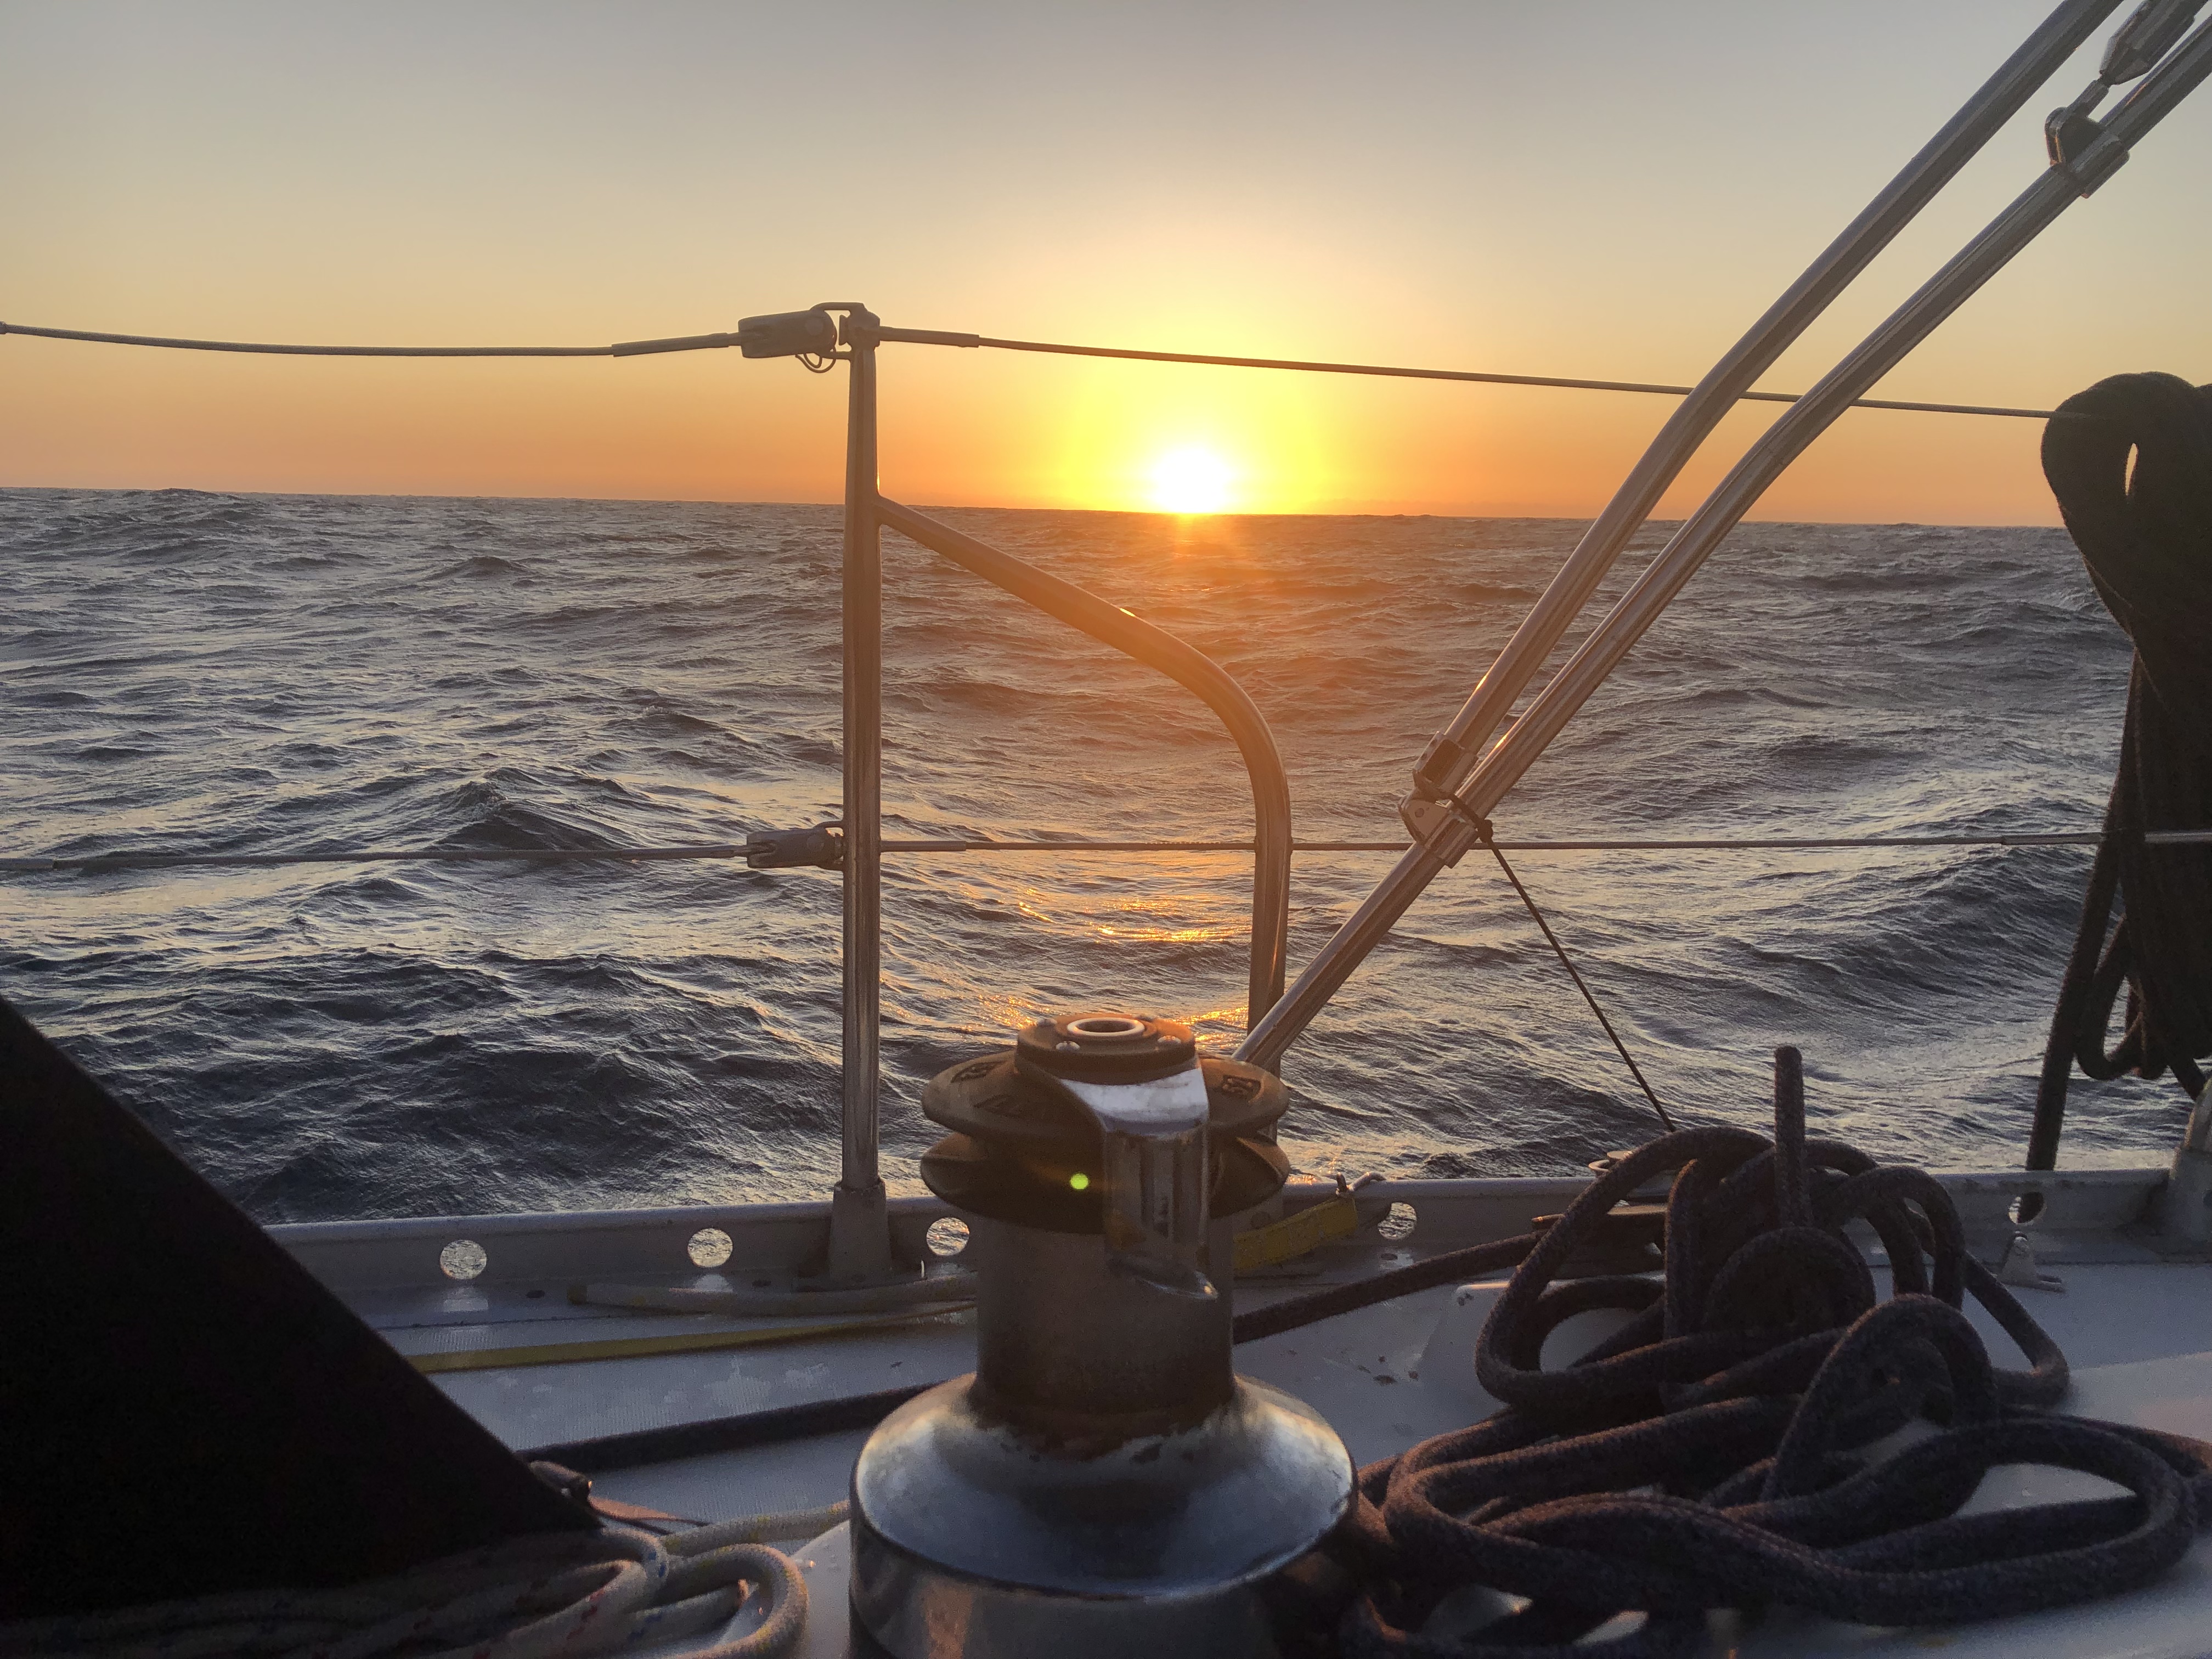 Zeilen varen vertrekken wereld rond reizen boot keven portugal lissabon anker bezoeken vrienden zwemmen zonsondergang